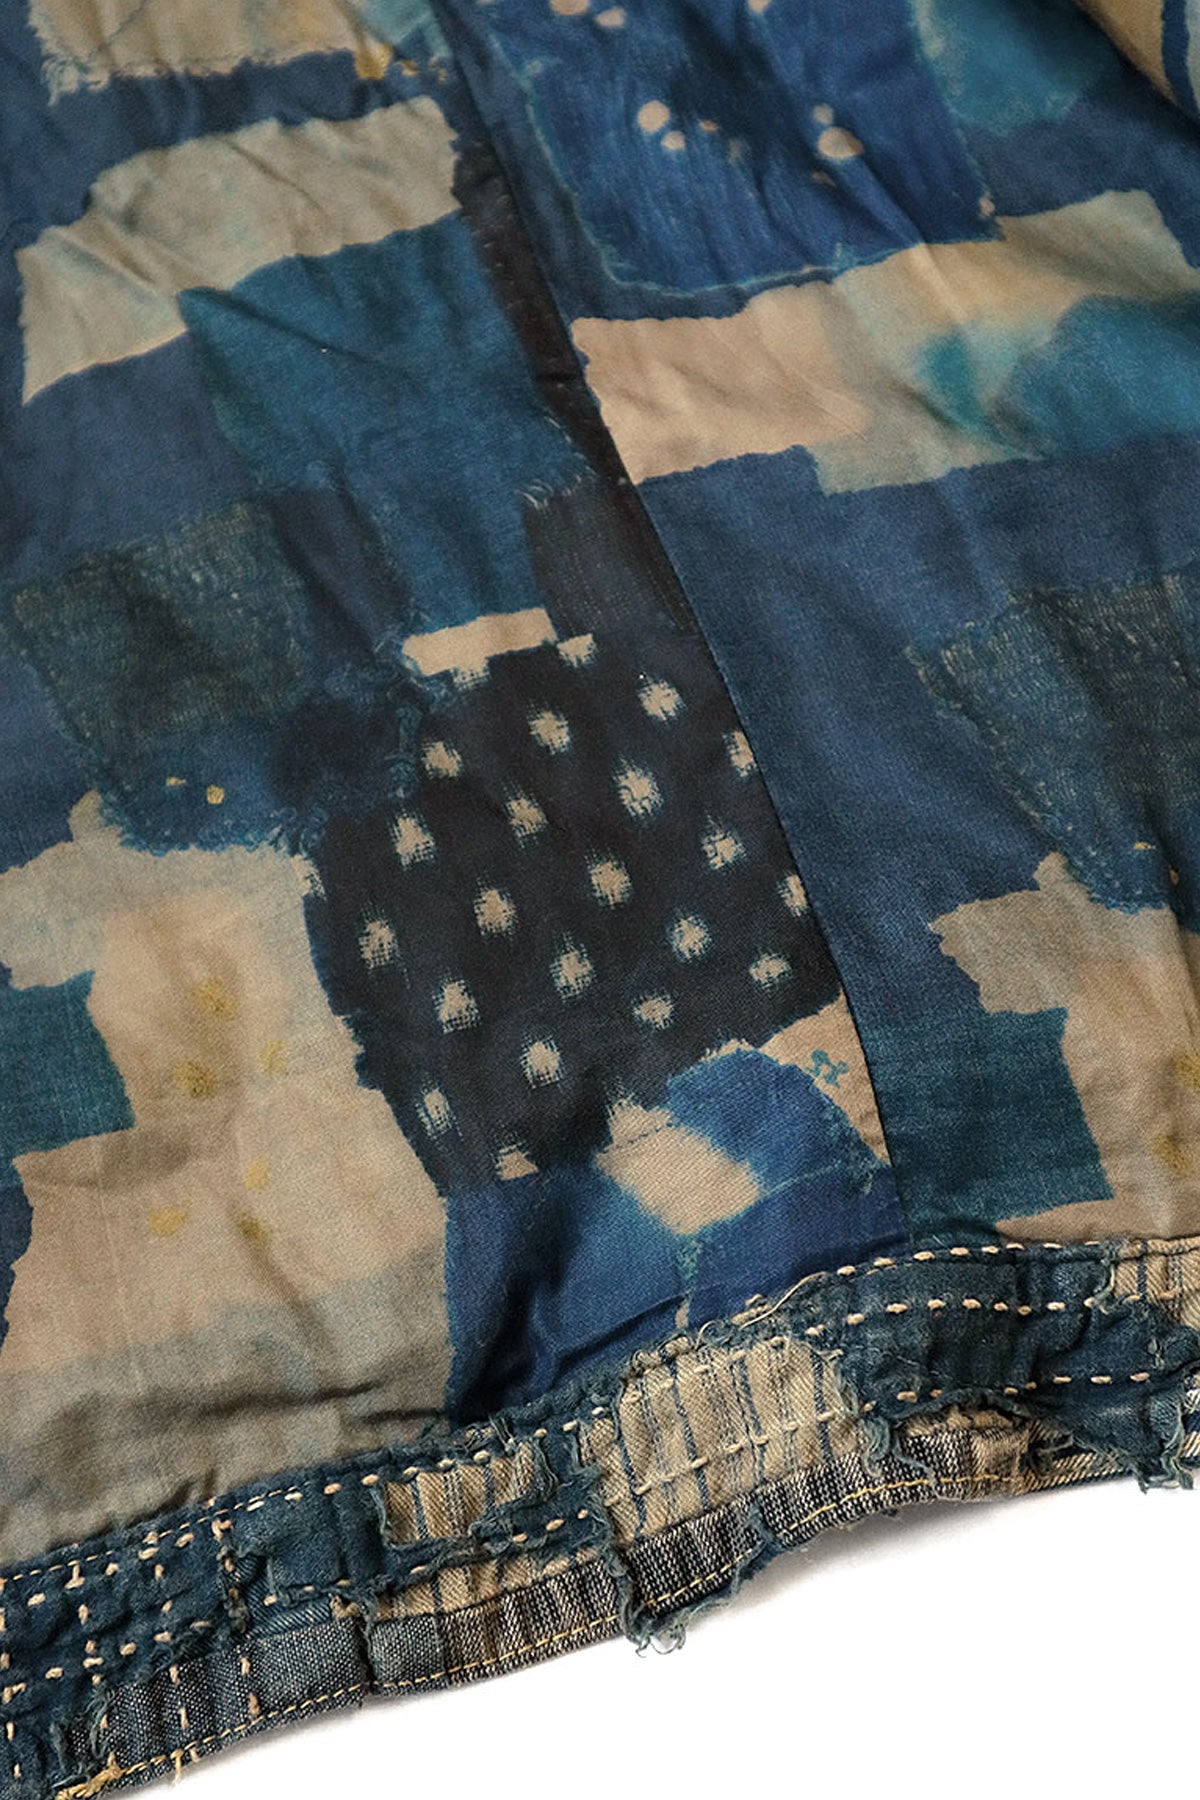 Kapital Boro Patchwork Jacket - Blue Outerwear, Clothing